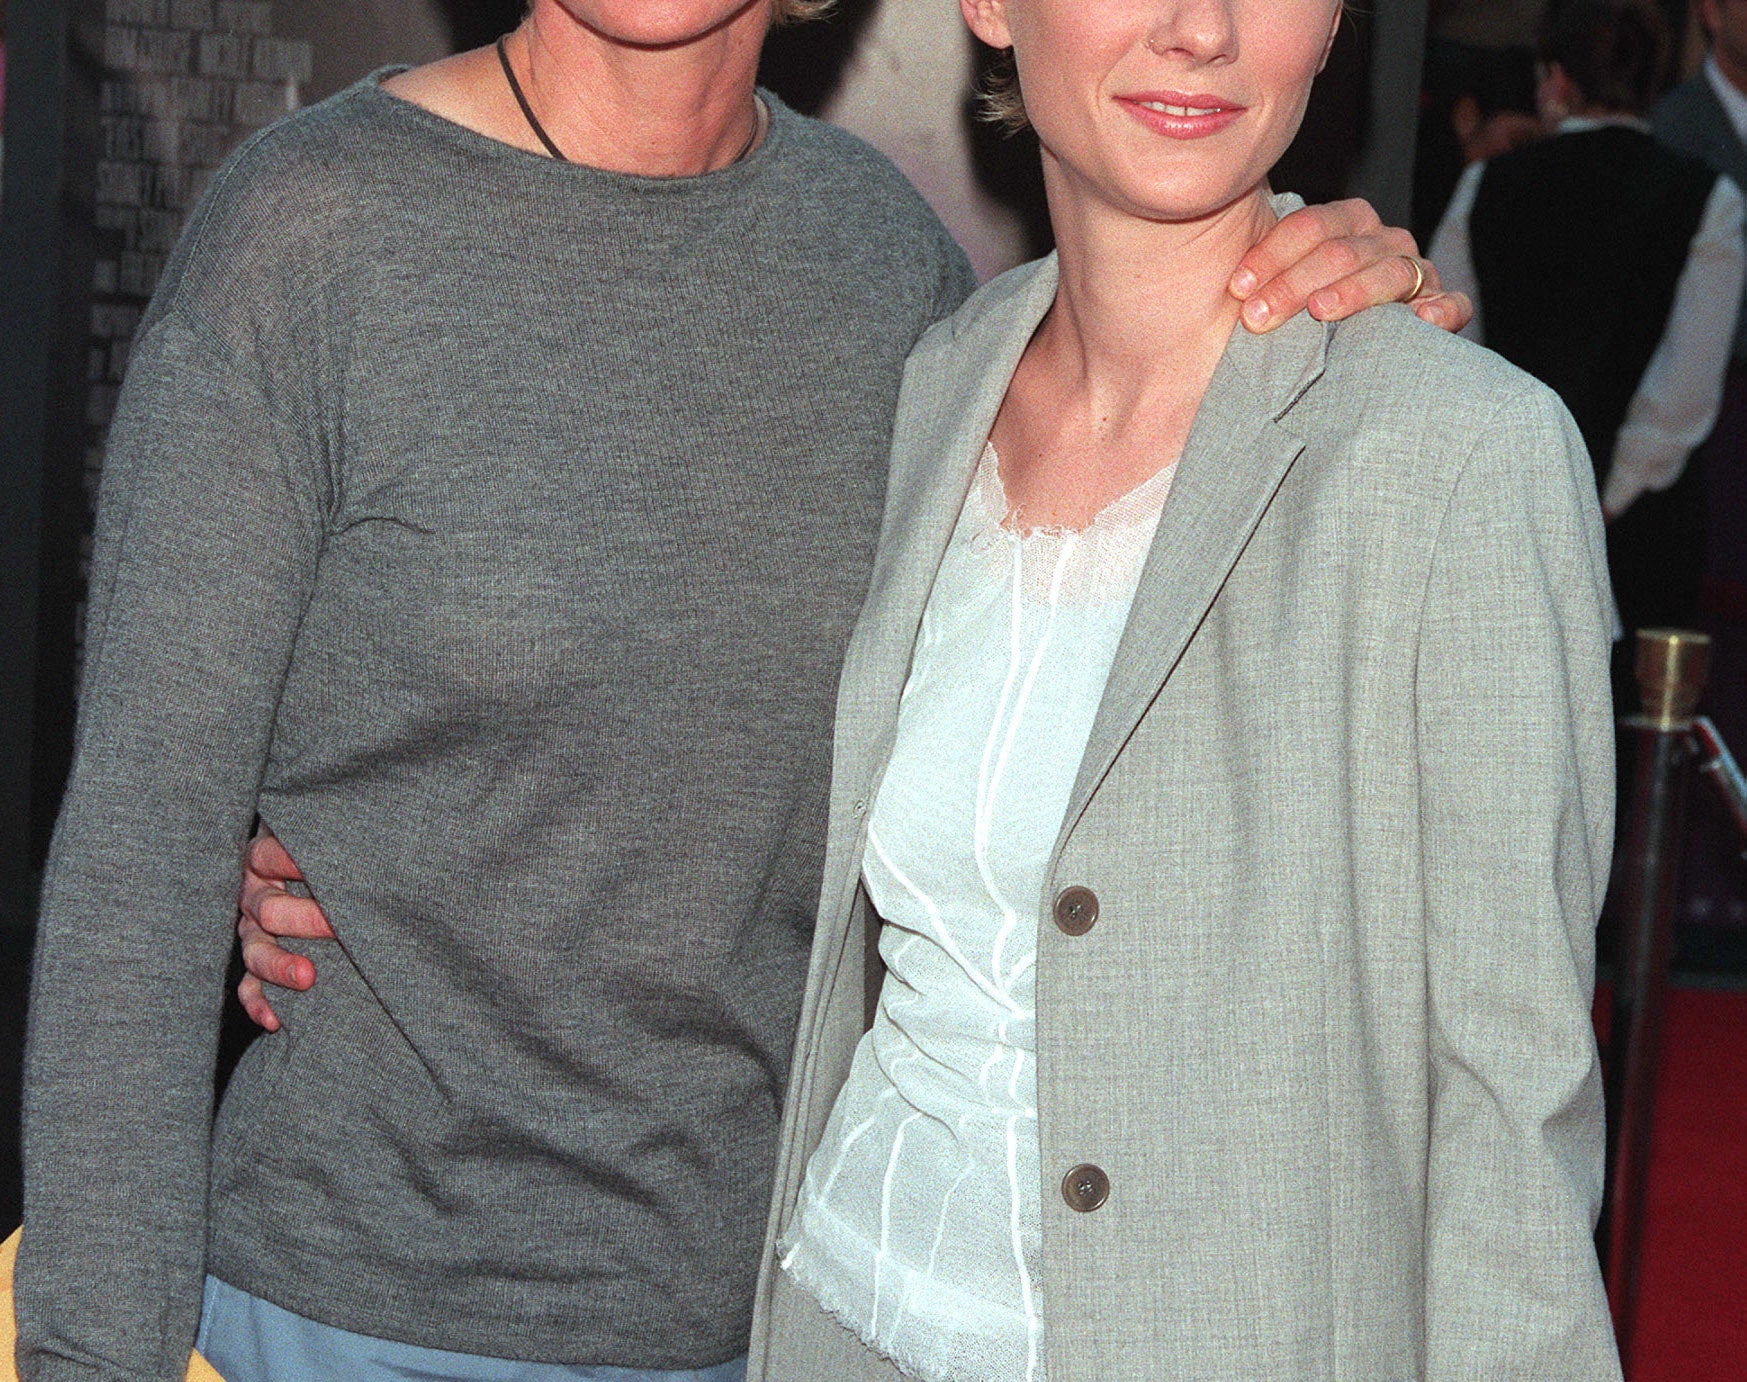 Anne and Ellen attend an event